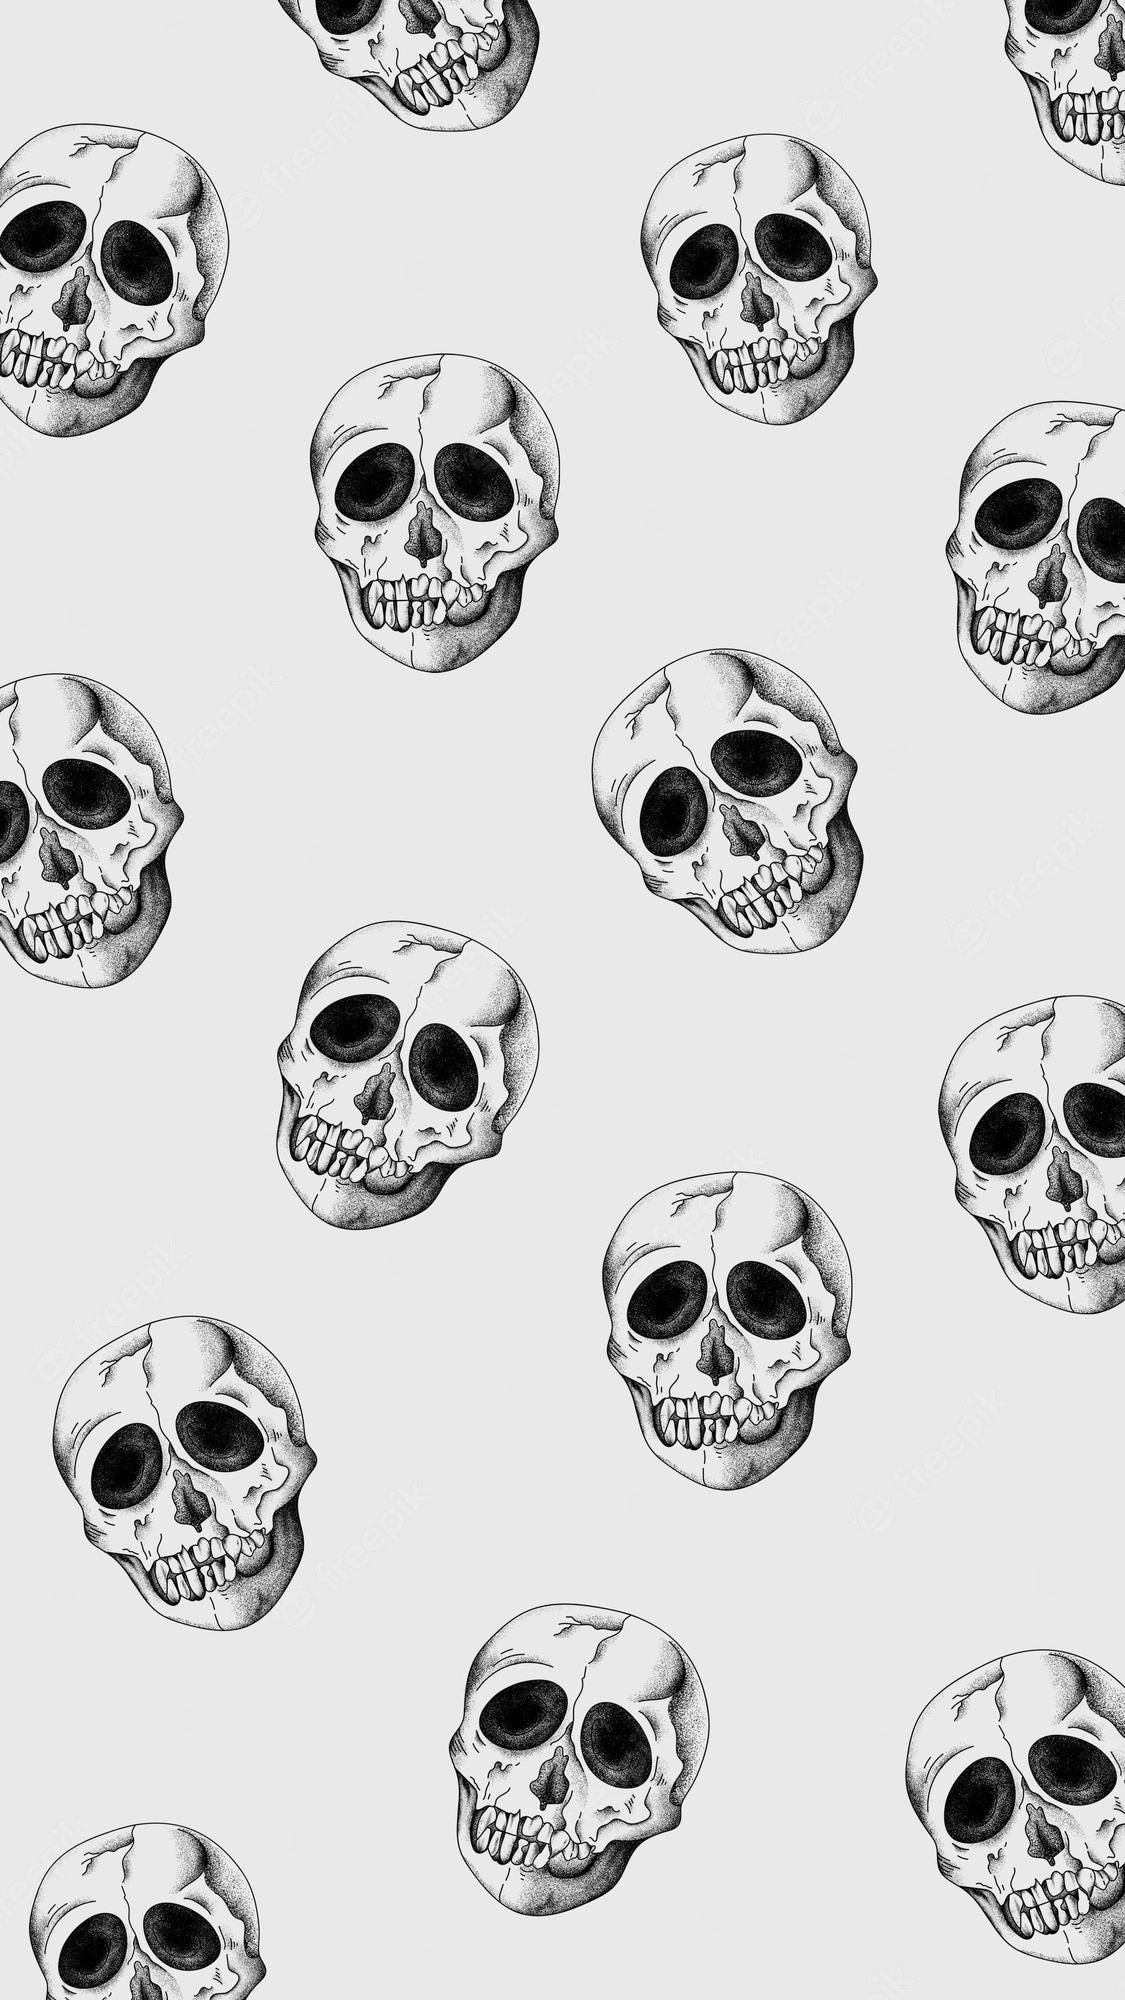 Skull wallpaper Vectors & Illustrations for Free Download